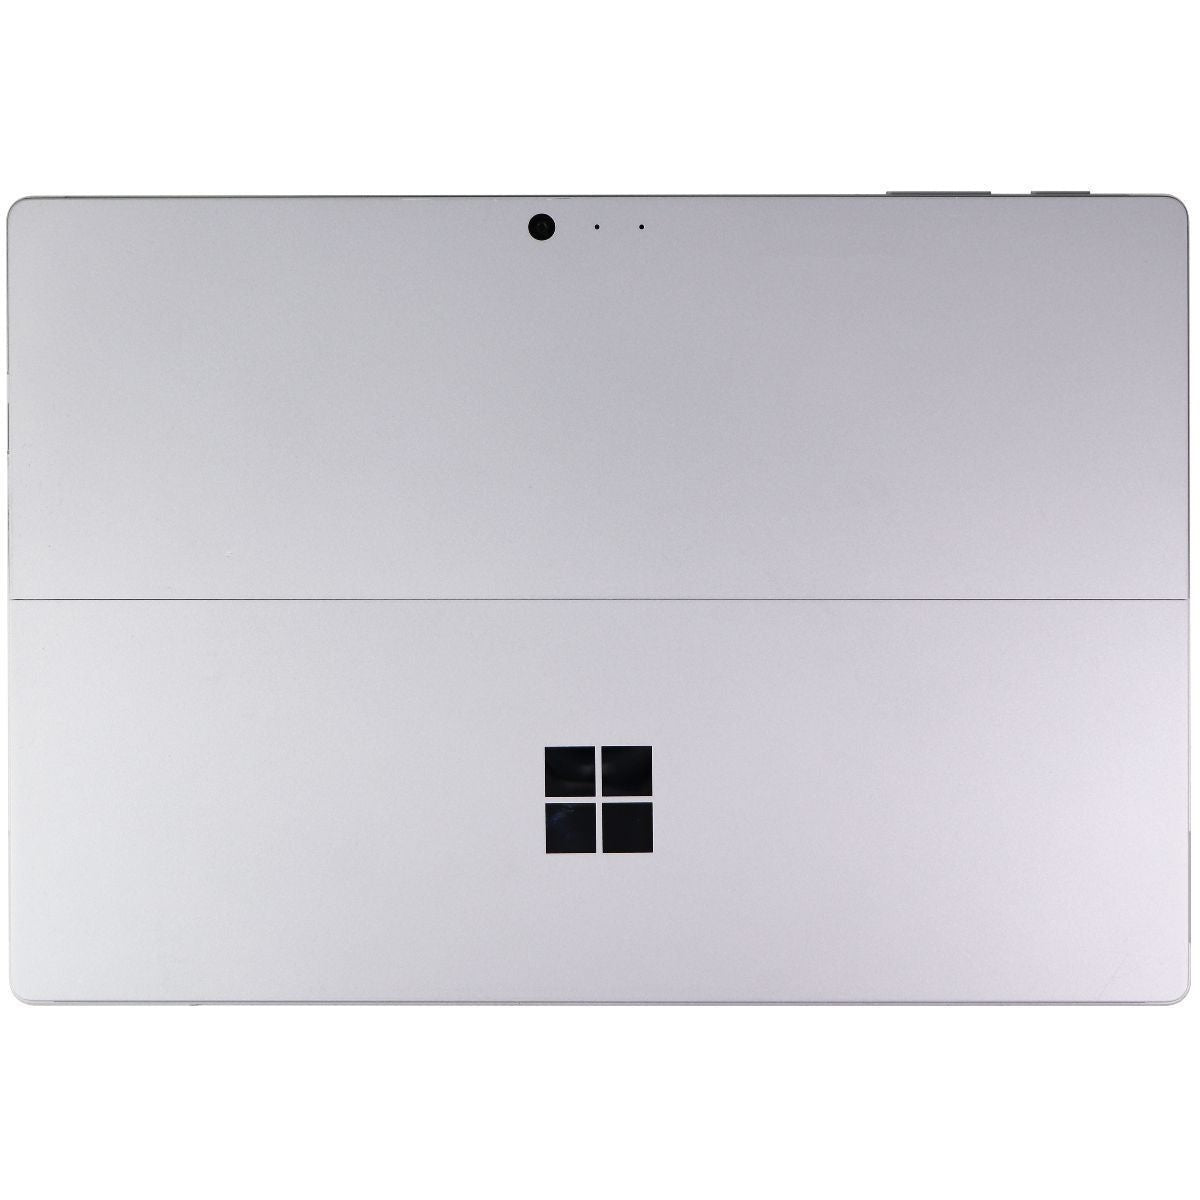 Microsoft Surface Pro 6 (1796) - Intel Core i5-8250U /8GB RAM/128GB - Platinum Laptops - PC Laptops & Netbooks Microsoft    - Simple Cell Bulk Wholesale Pricing - USA Seller